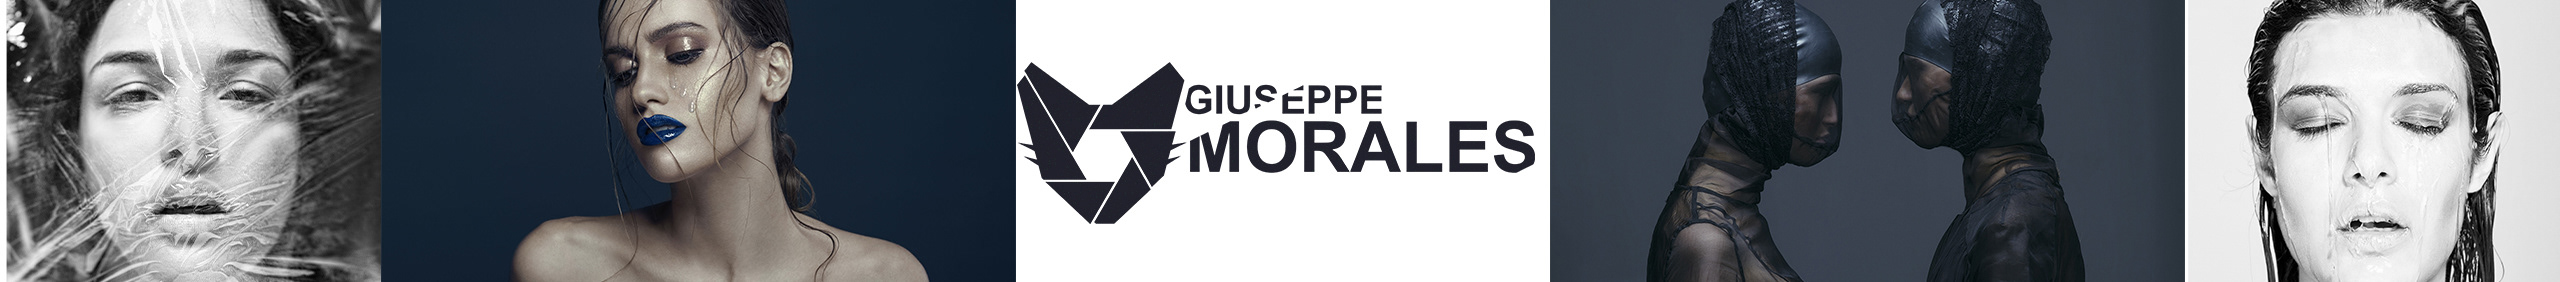 Giuseppe Morales's profile banner